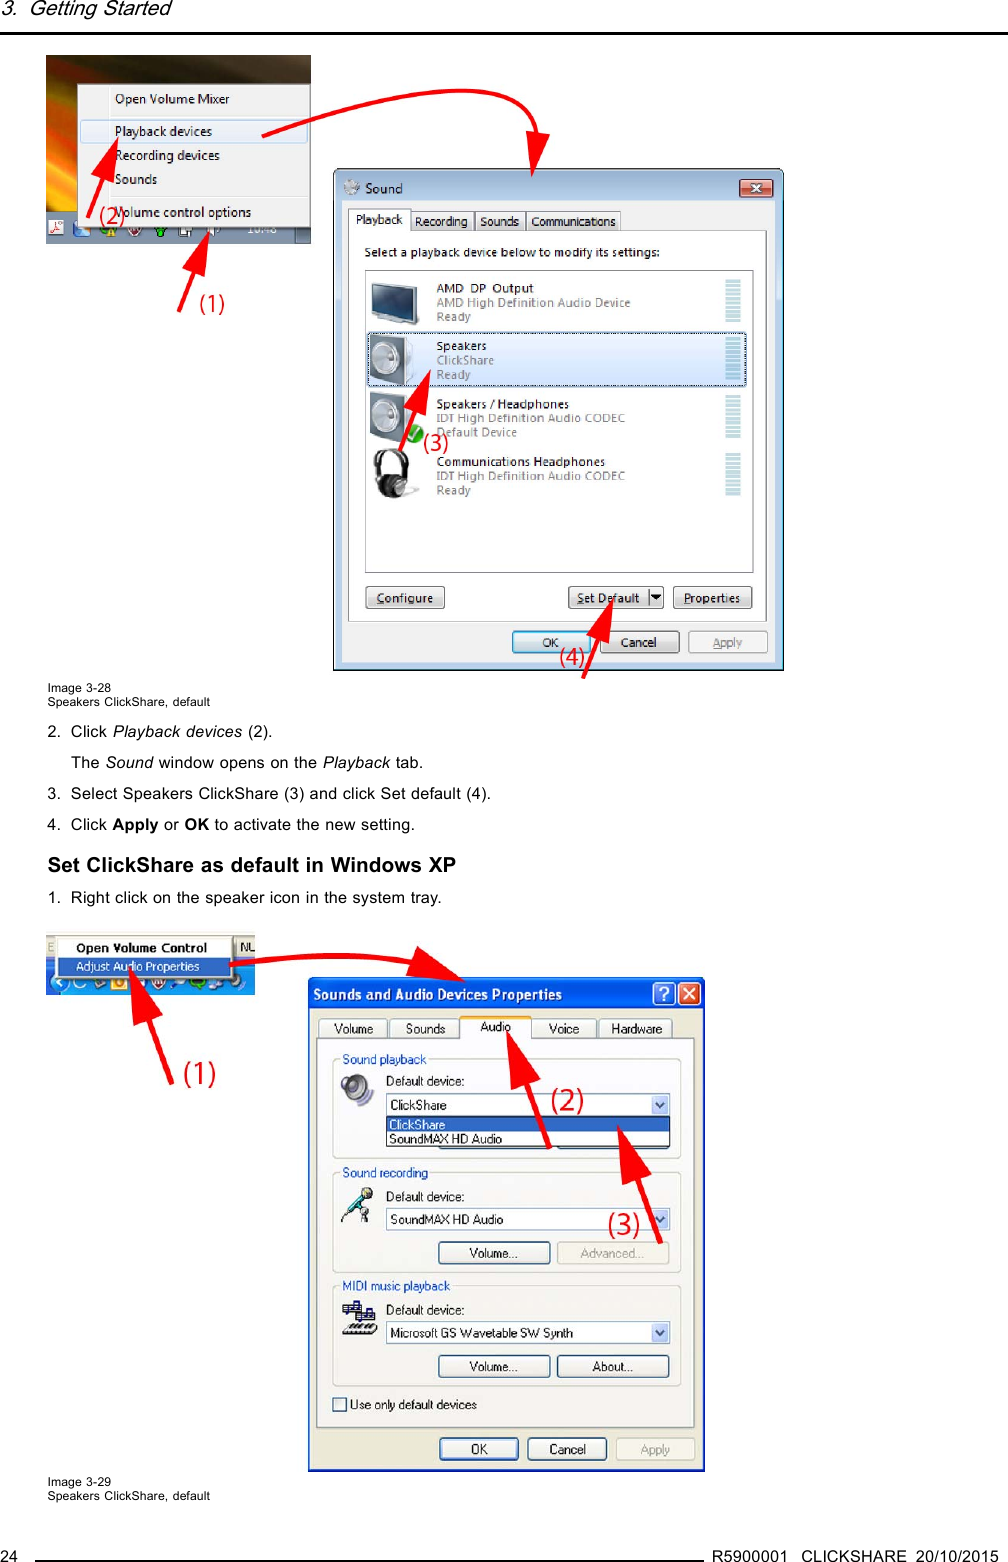 3. Getting StartedImage 3-28Speakers ClickShare, default2. Click Playback devices (2).The Sound window opens on the Playback tab.3. Select Speakers ClickShare (3) and click Set default (4).4. Click Apply or OK to activate the new setting.Set ClickShare as default in Windows XP1. Right click on the speaker icon in the system tray.Image 3-29Speakers ClickShare, default24 R5900001 CLICKSHARE 20/10/2015